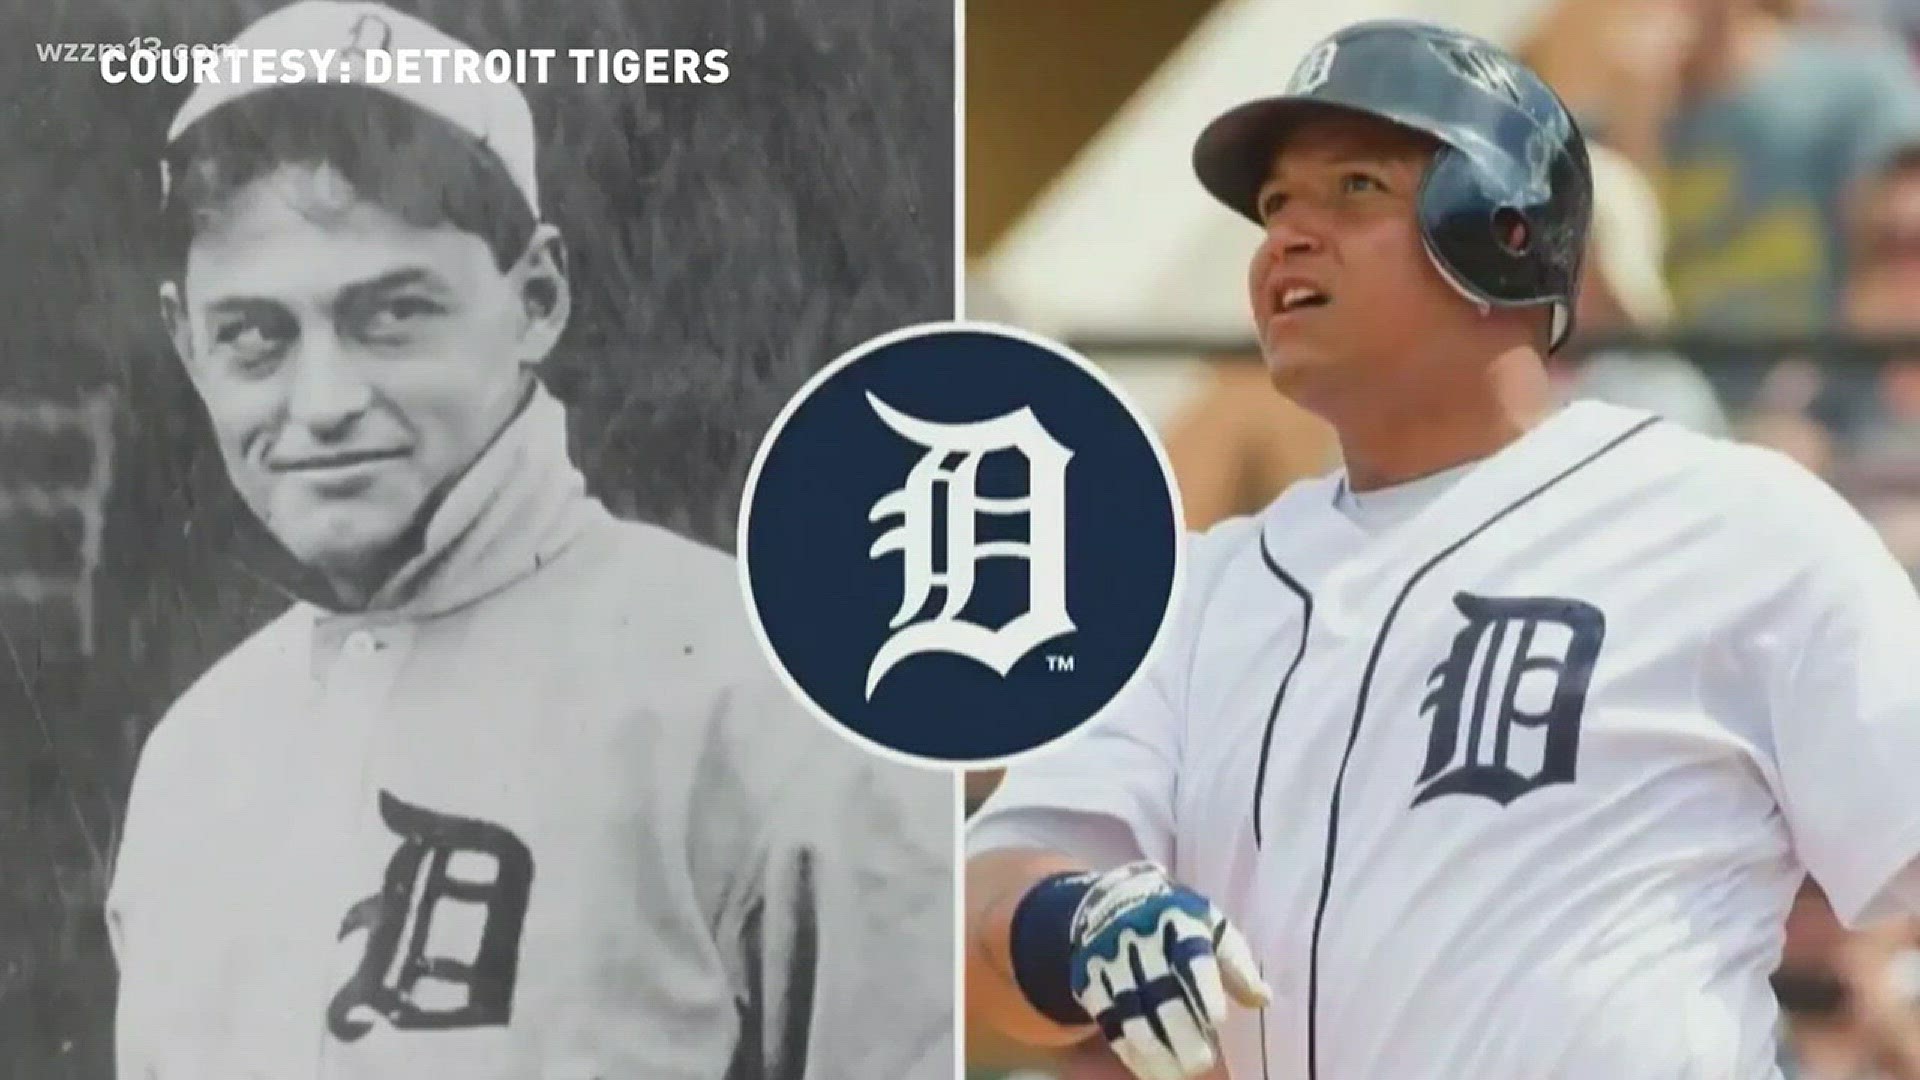 FBHW: Tigers make subtle change to uniform